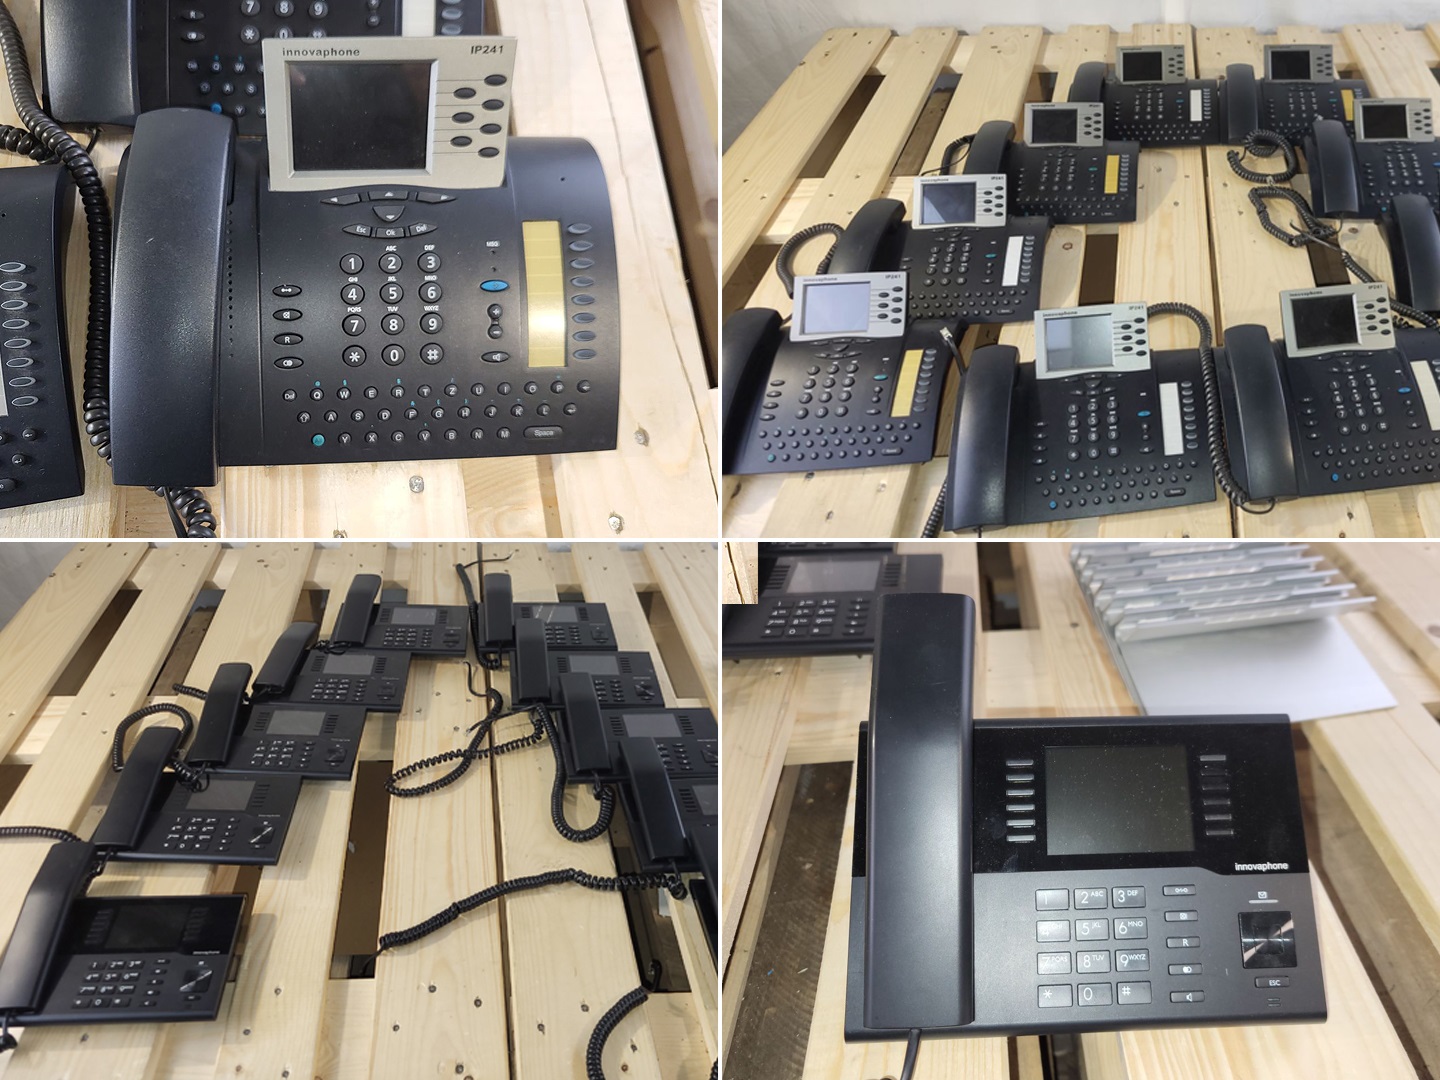 IP-Telefone innovaphone IP241 und Design-Modell IP222